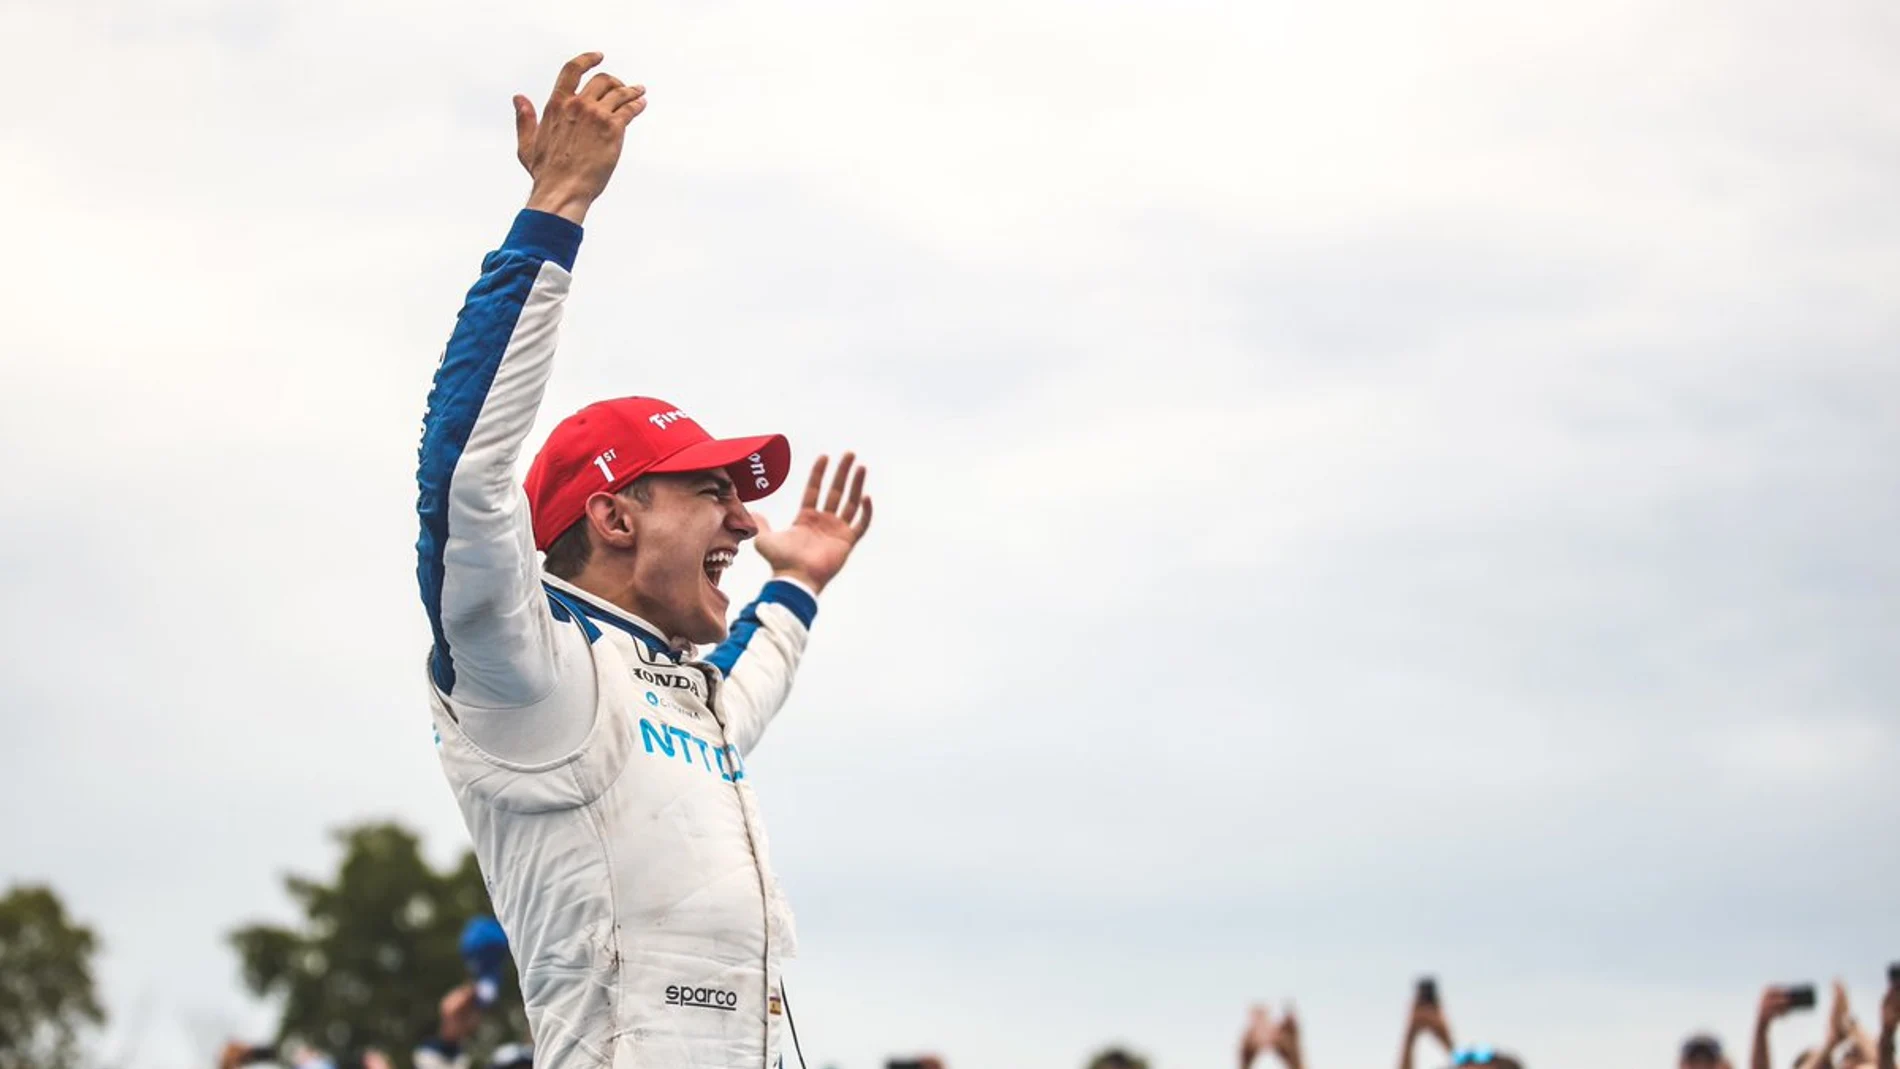  Alex Palou celebra su segundo triunfo en la IndyCar